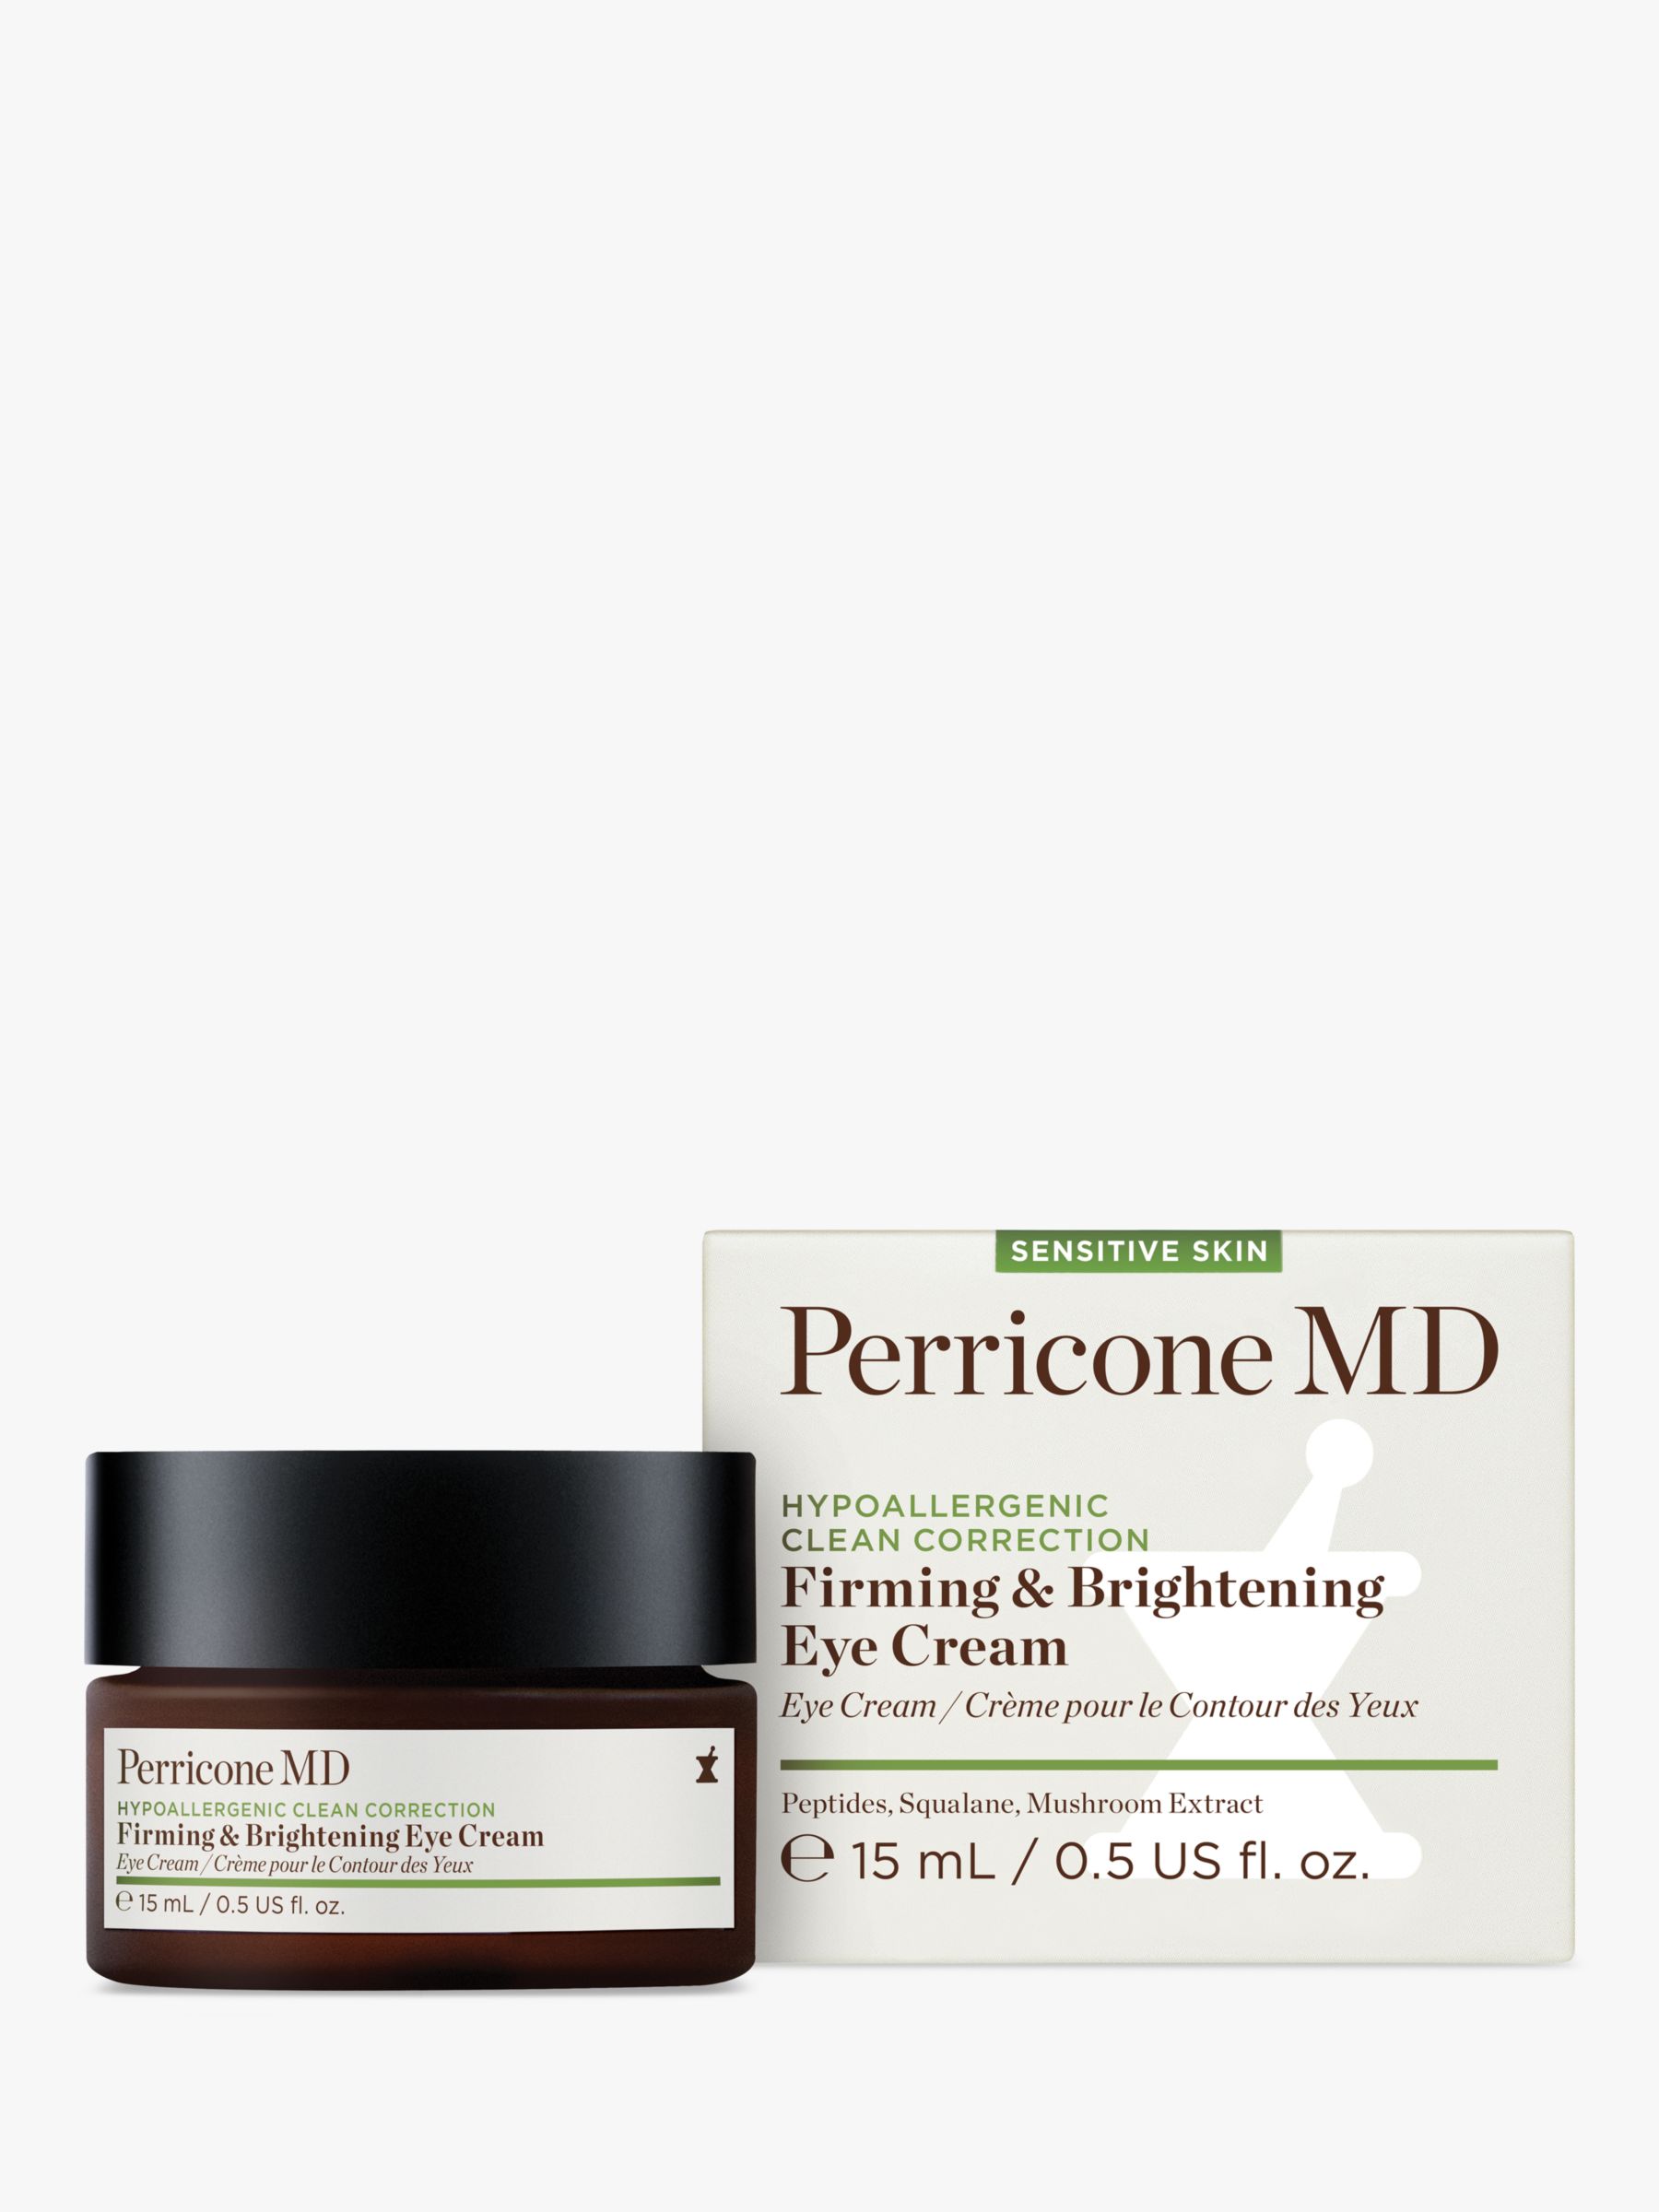 Perricone MD Hypoallergenic Clean Correction Firming & Brightening Eye Cream, 15ml 1